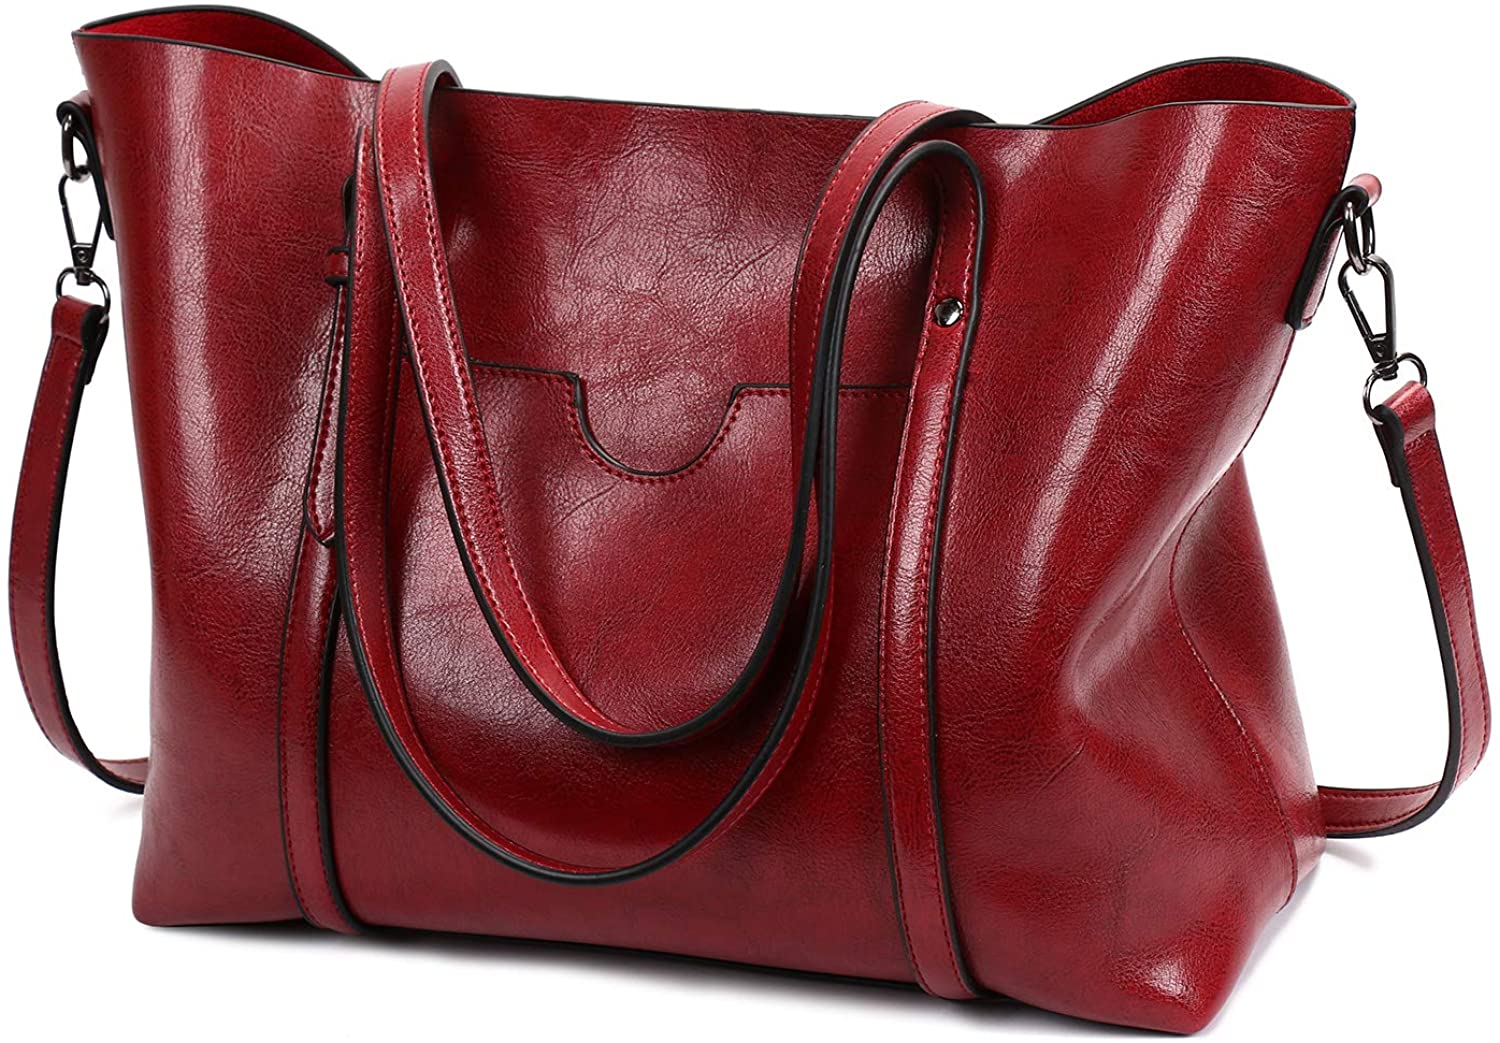 Price:$12.99    Women's Tote Shoulder Bag Top Handle Satchel Handbags Cross body Bag (wine red)  Clothing